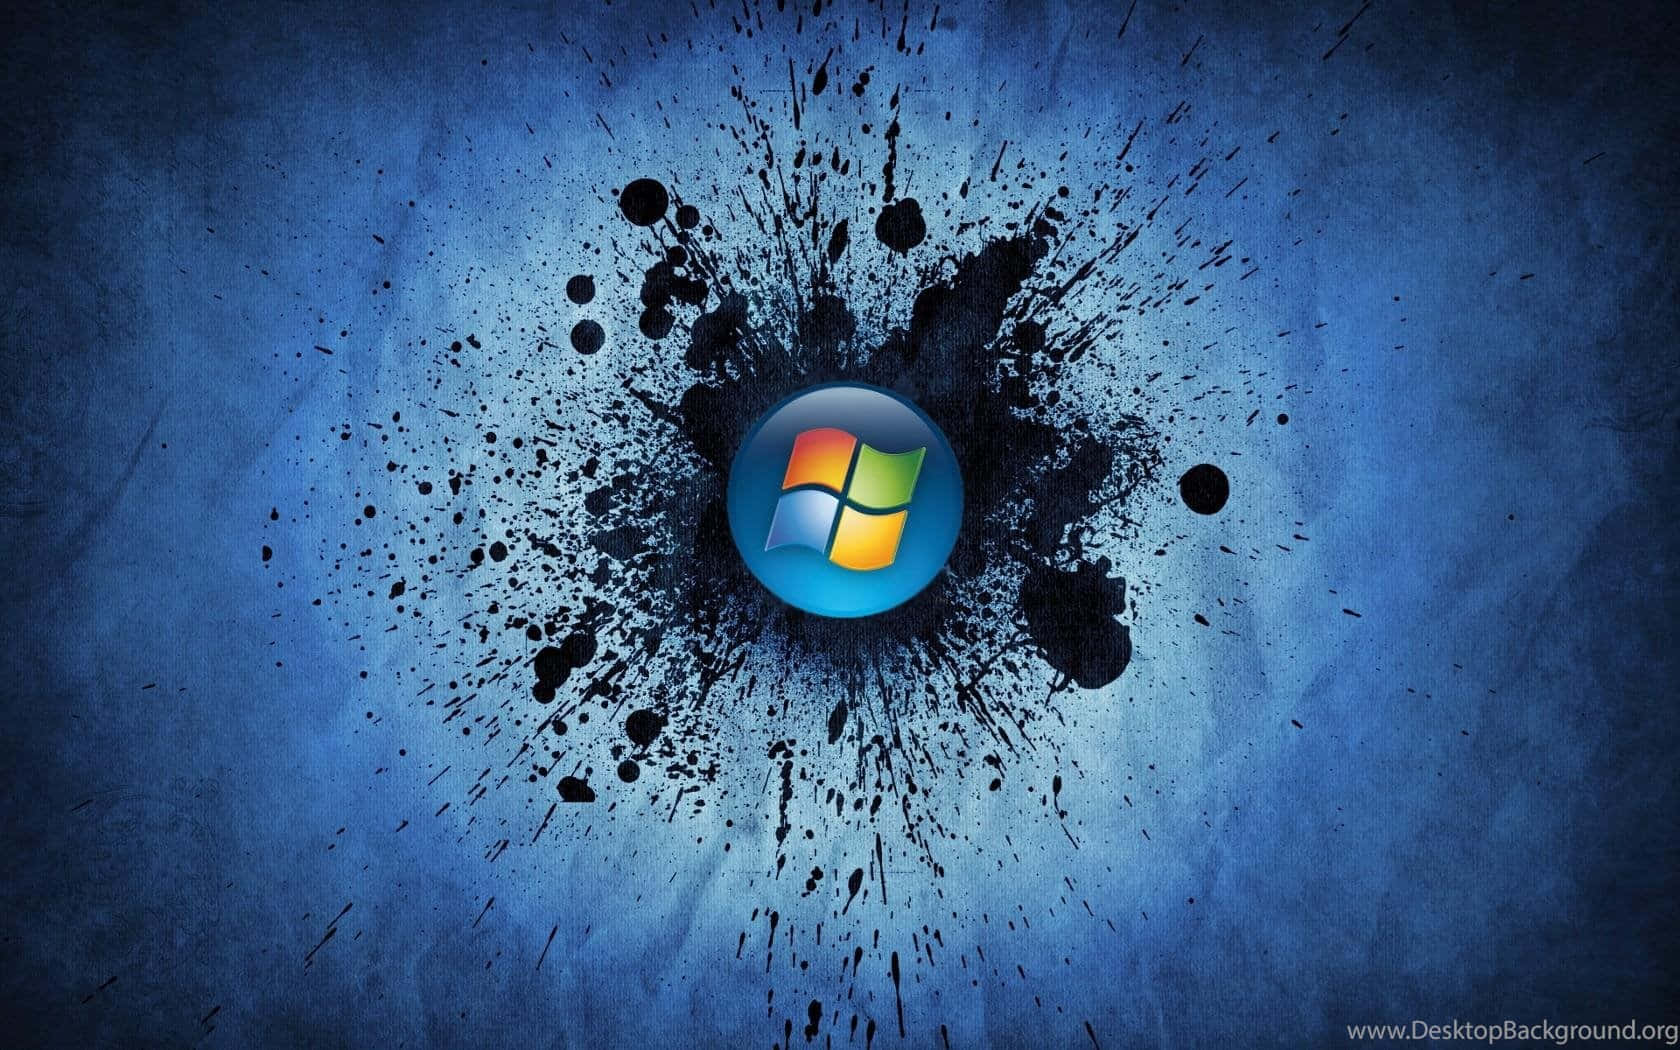 Modern Windows Desktop designed with a Cool Blue Theme Wallpaper